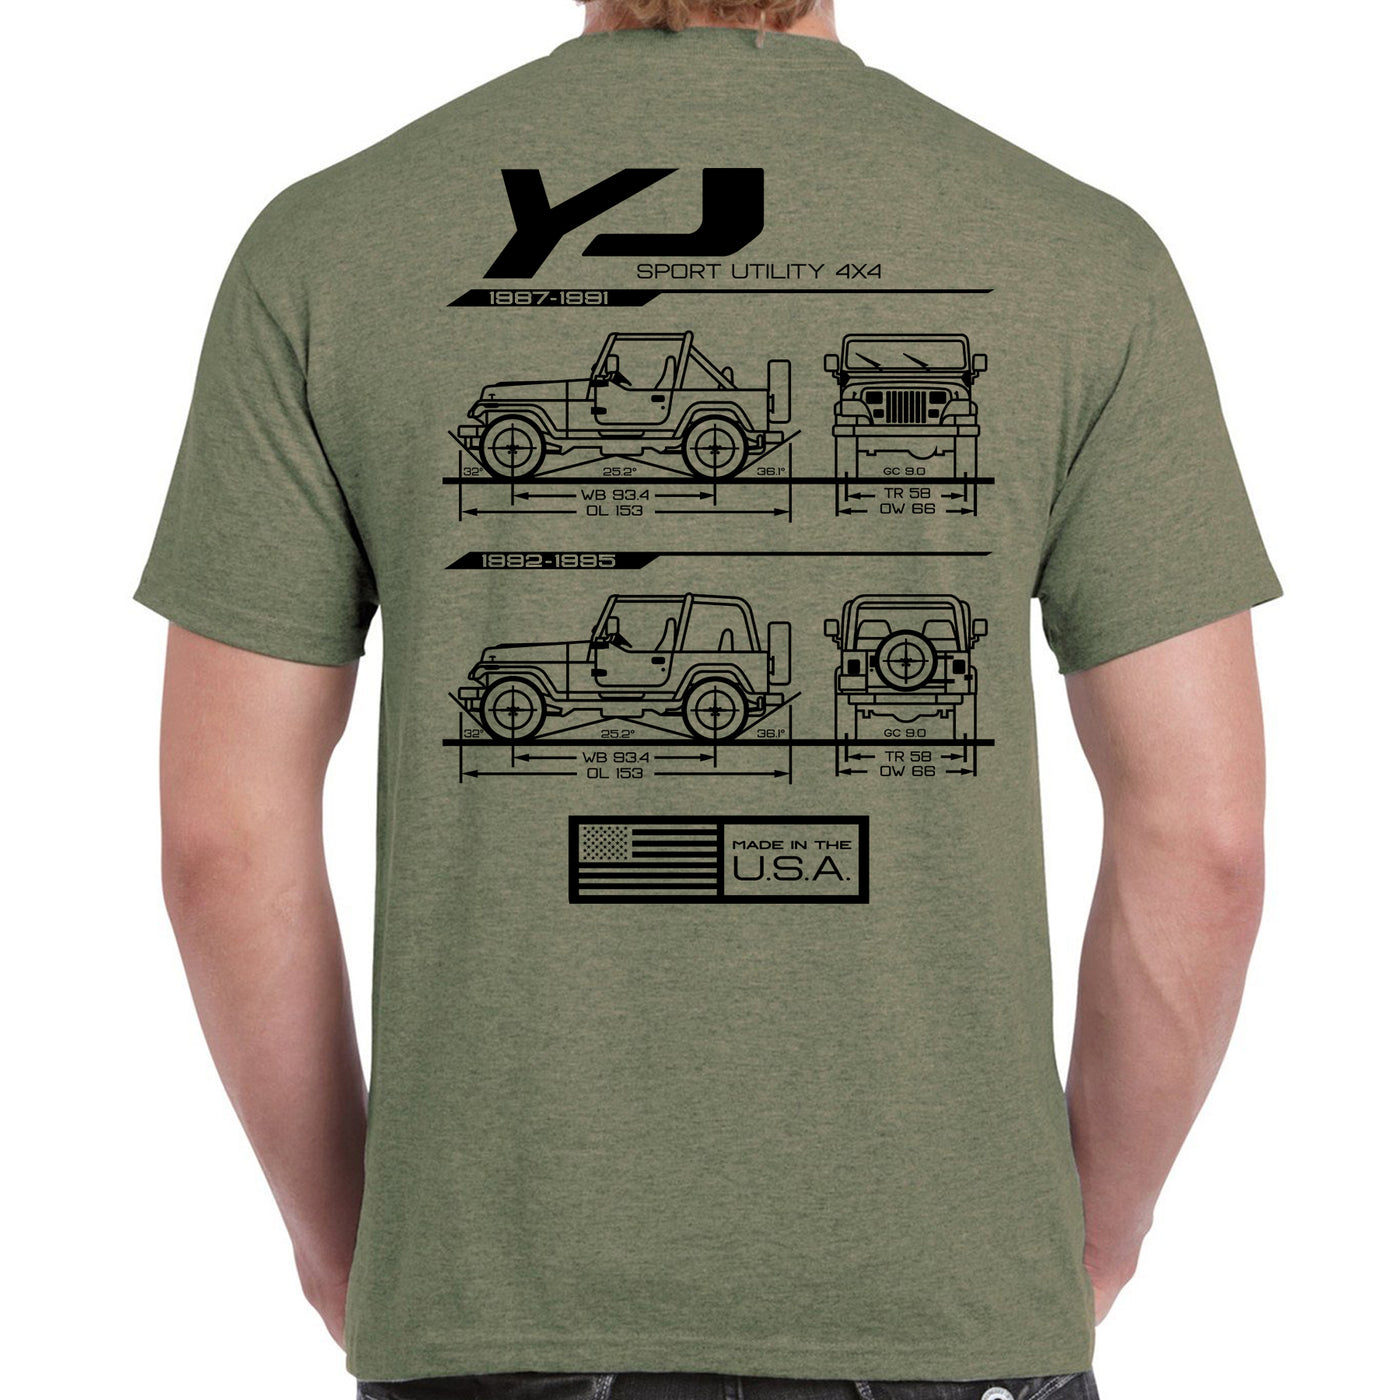 YJ Blueprint T-Shirt